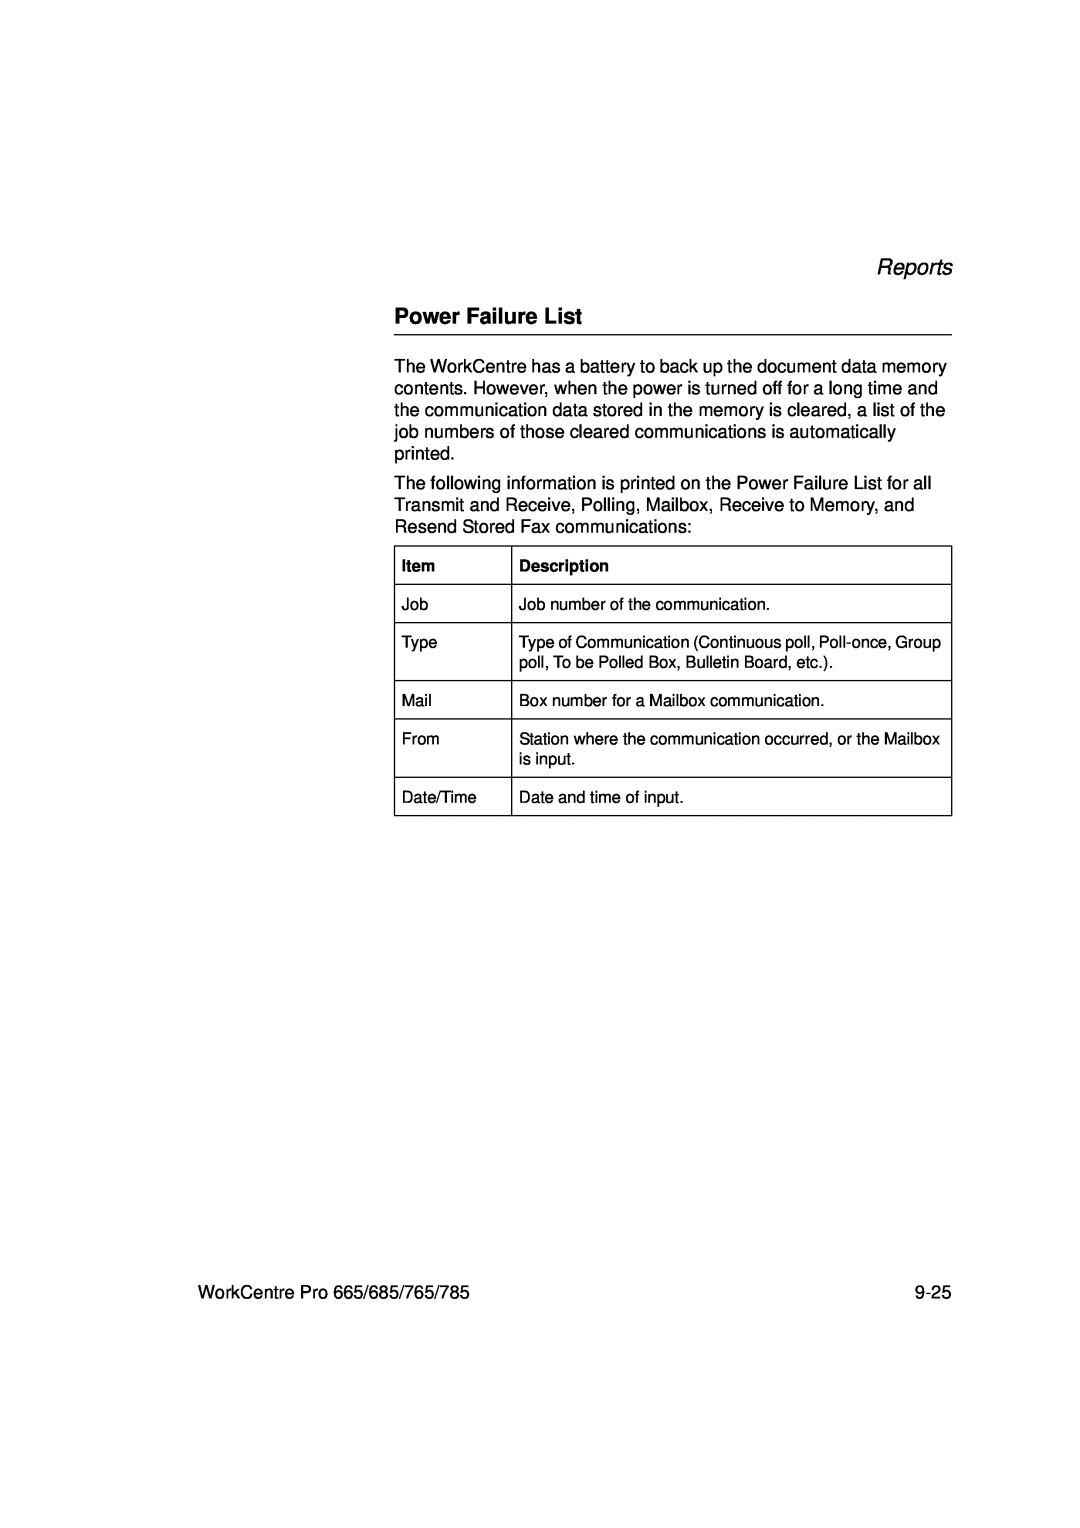 Xerox 785, 765, 665, 685 manual Power Failure List, Reports 